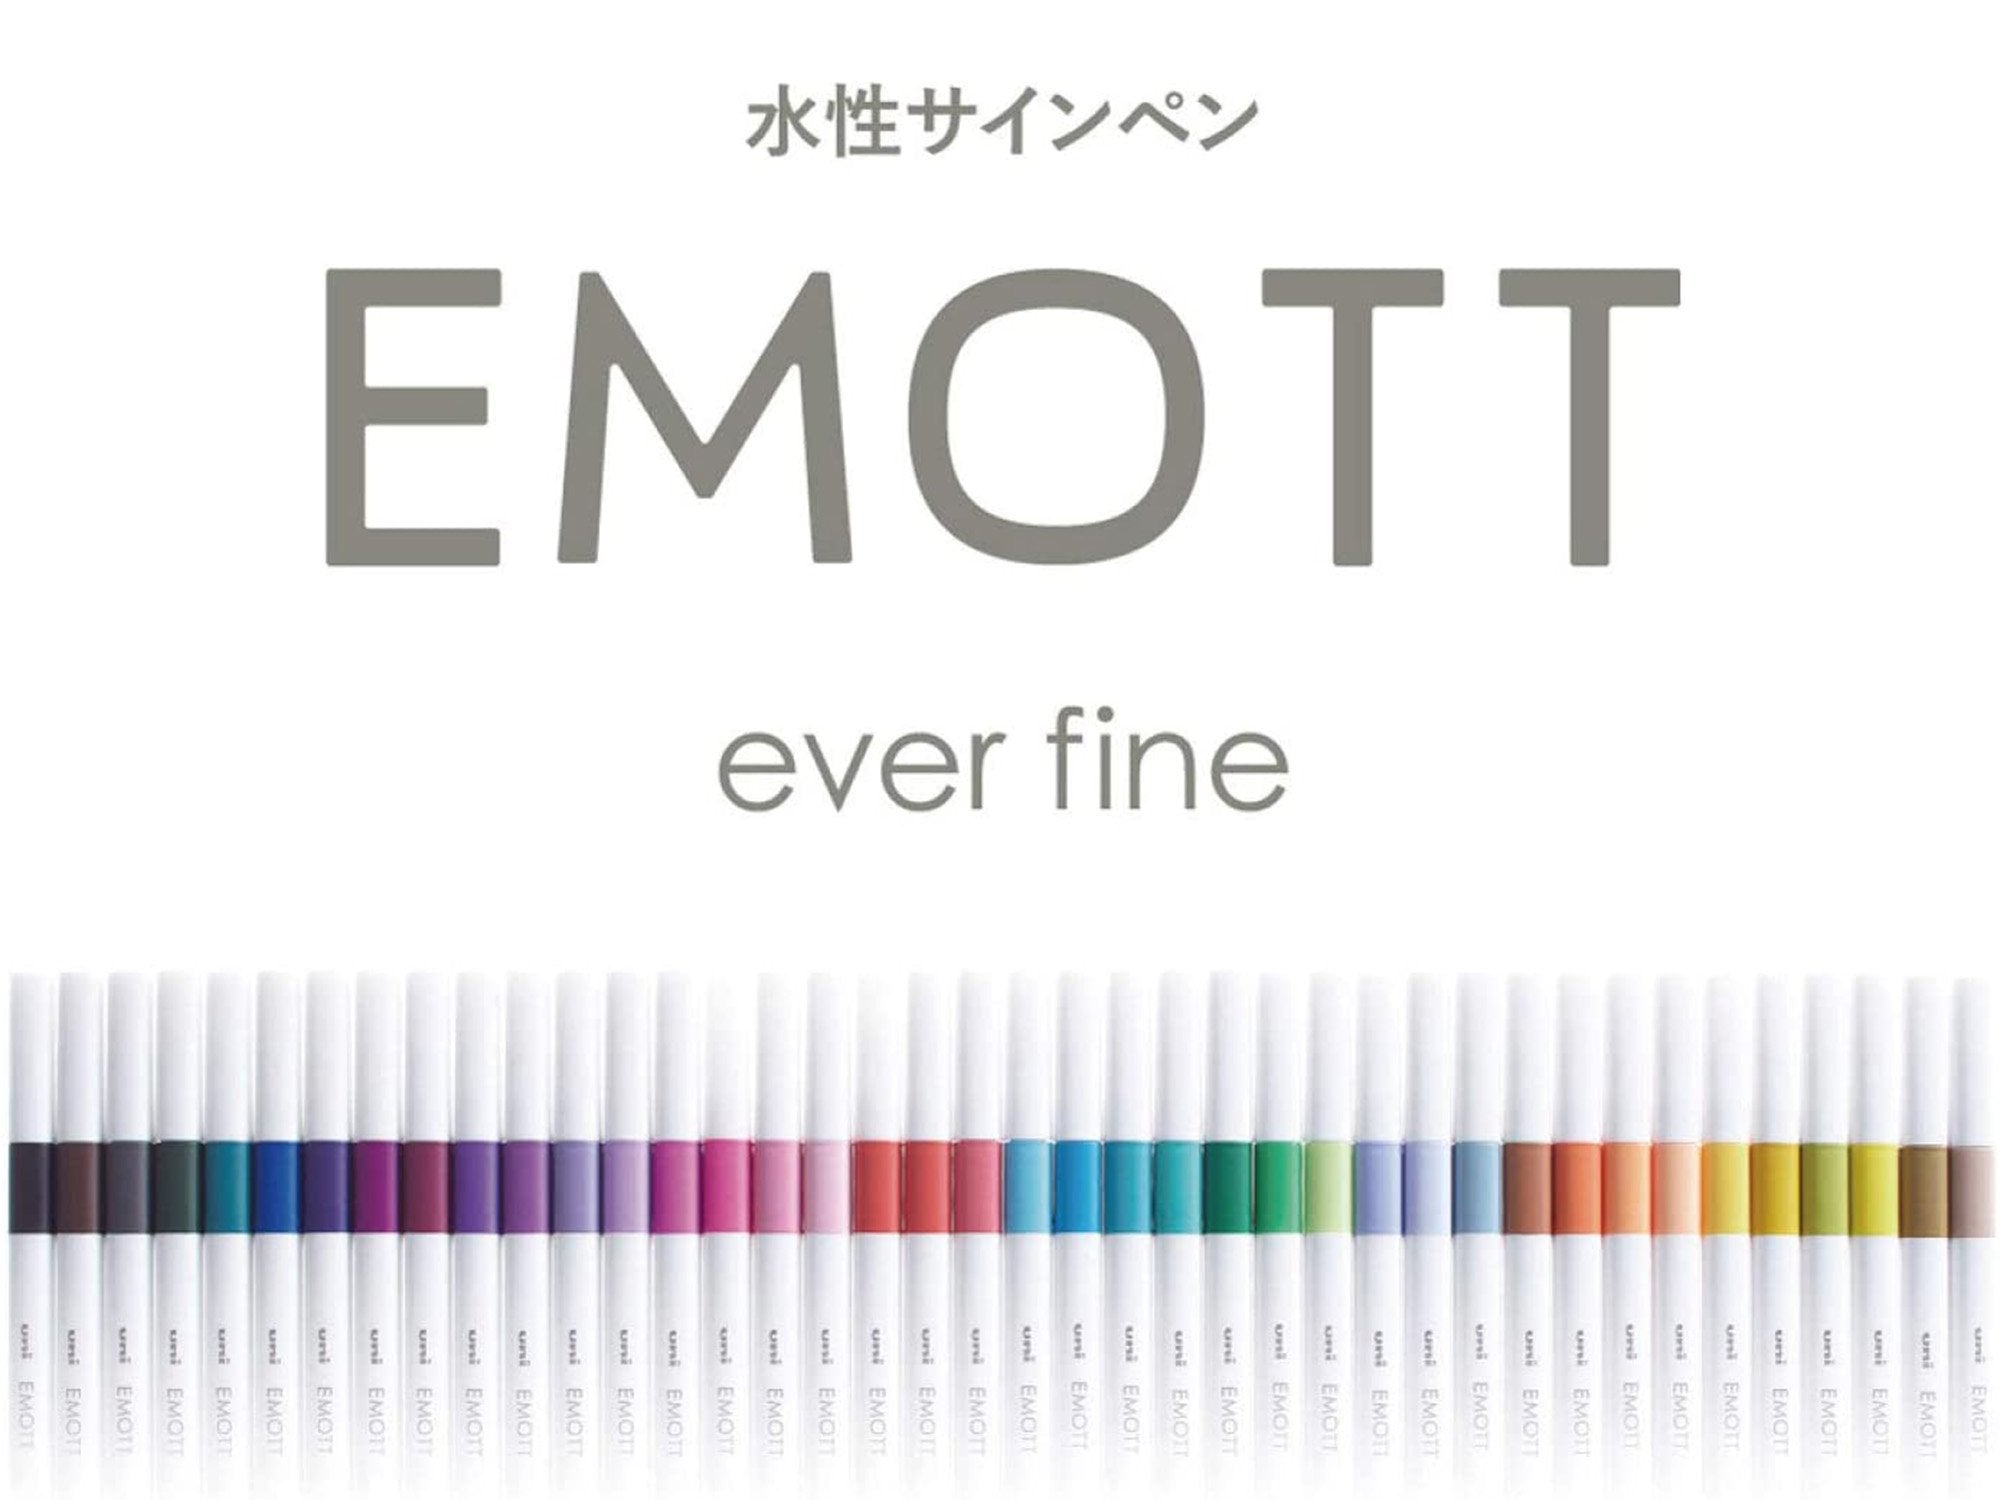 Emott 0.4mm Fineliner 10-Pen Set #1